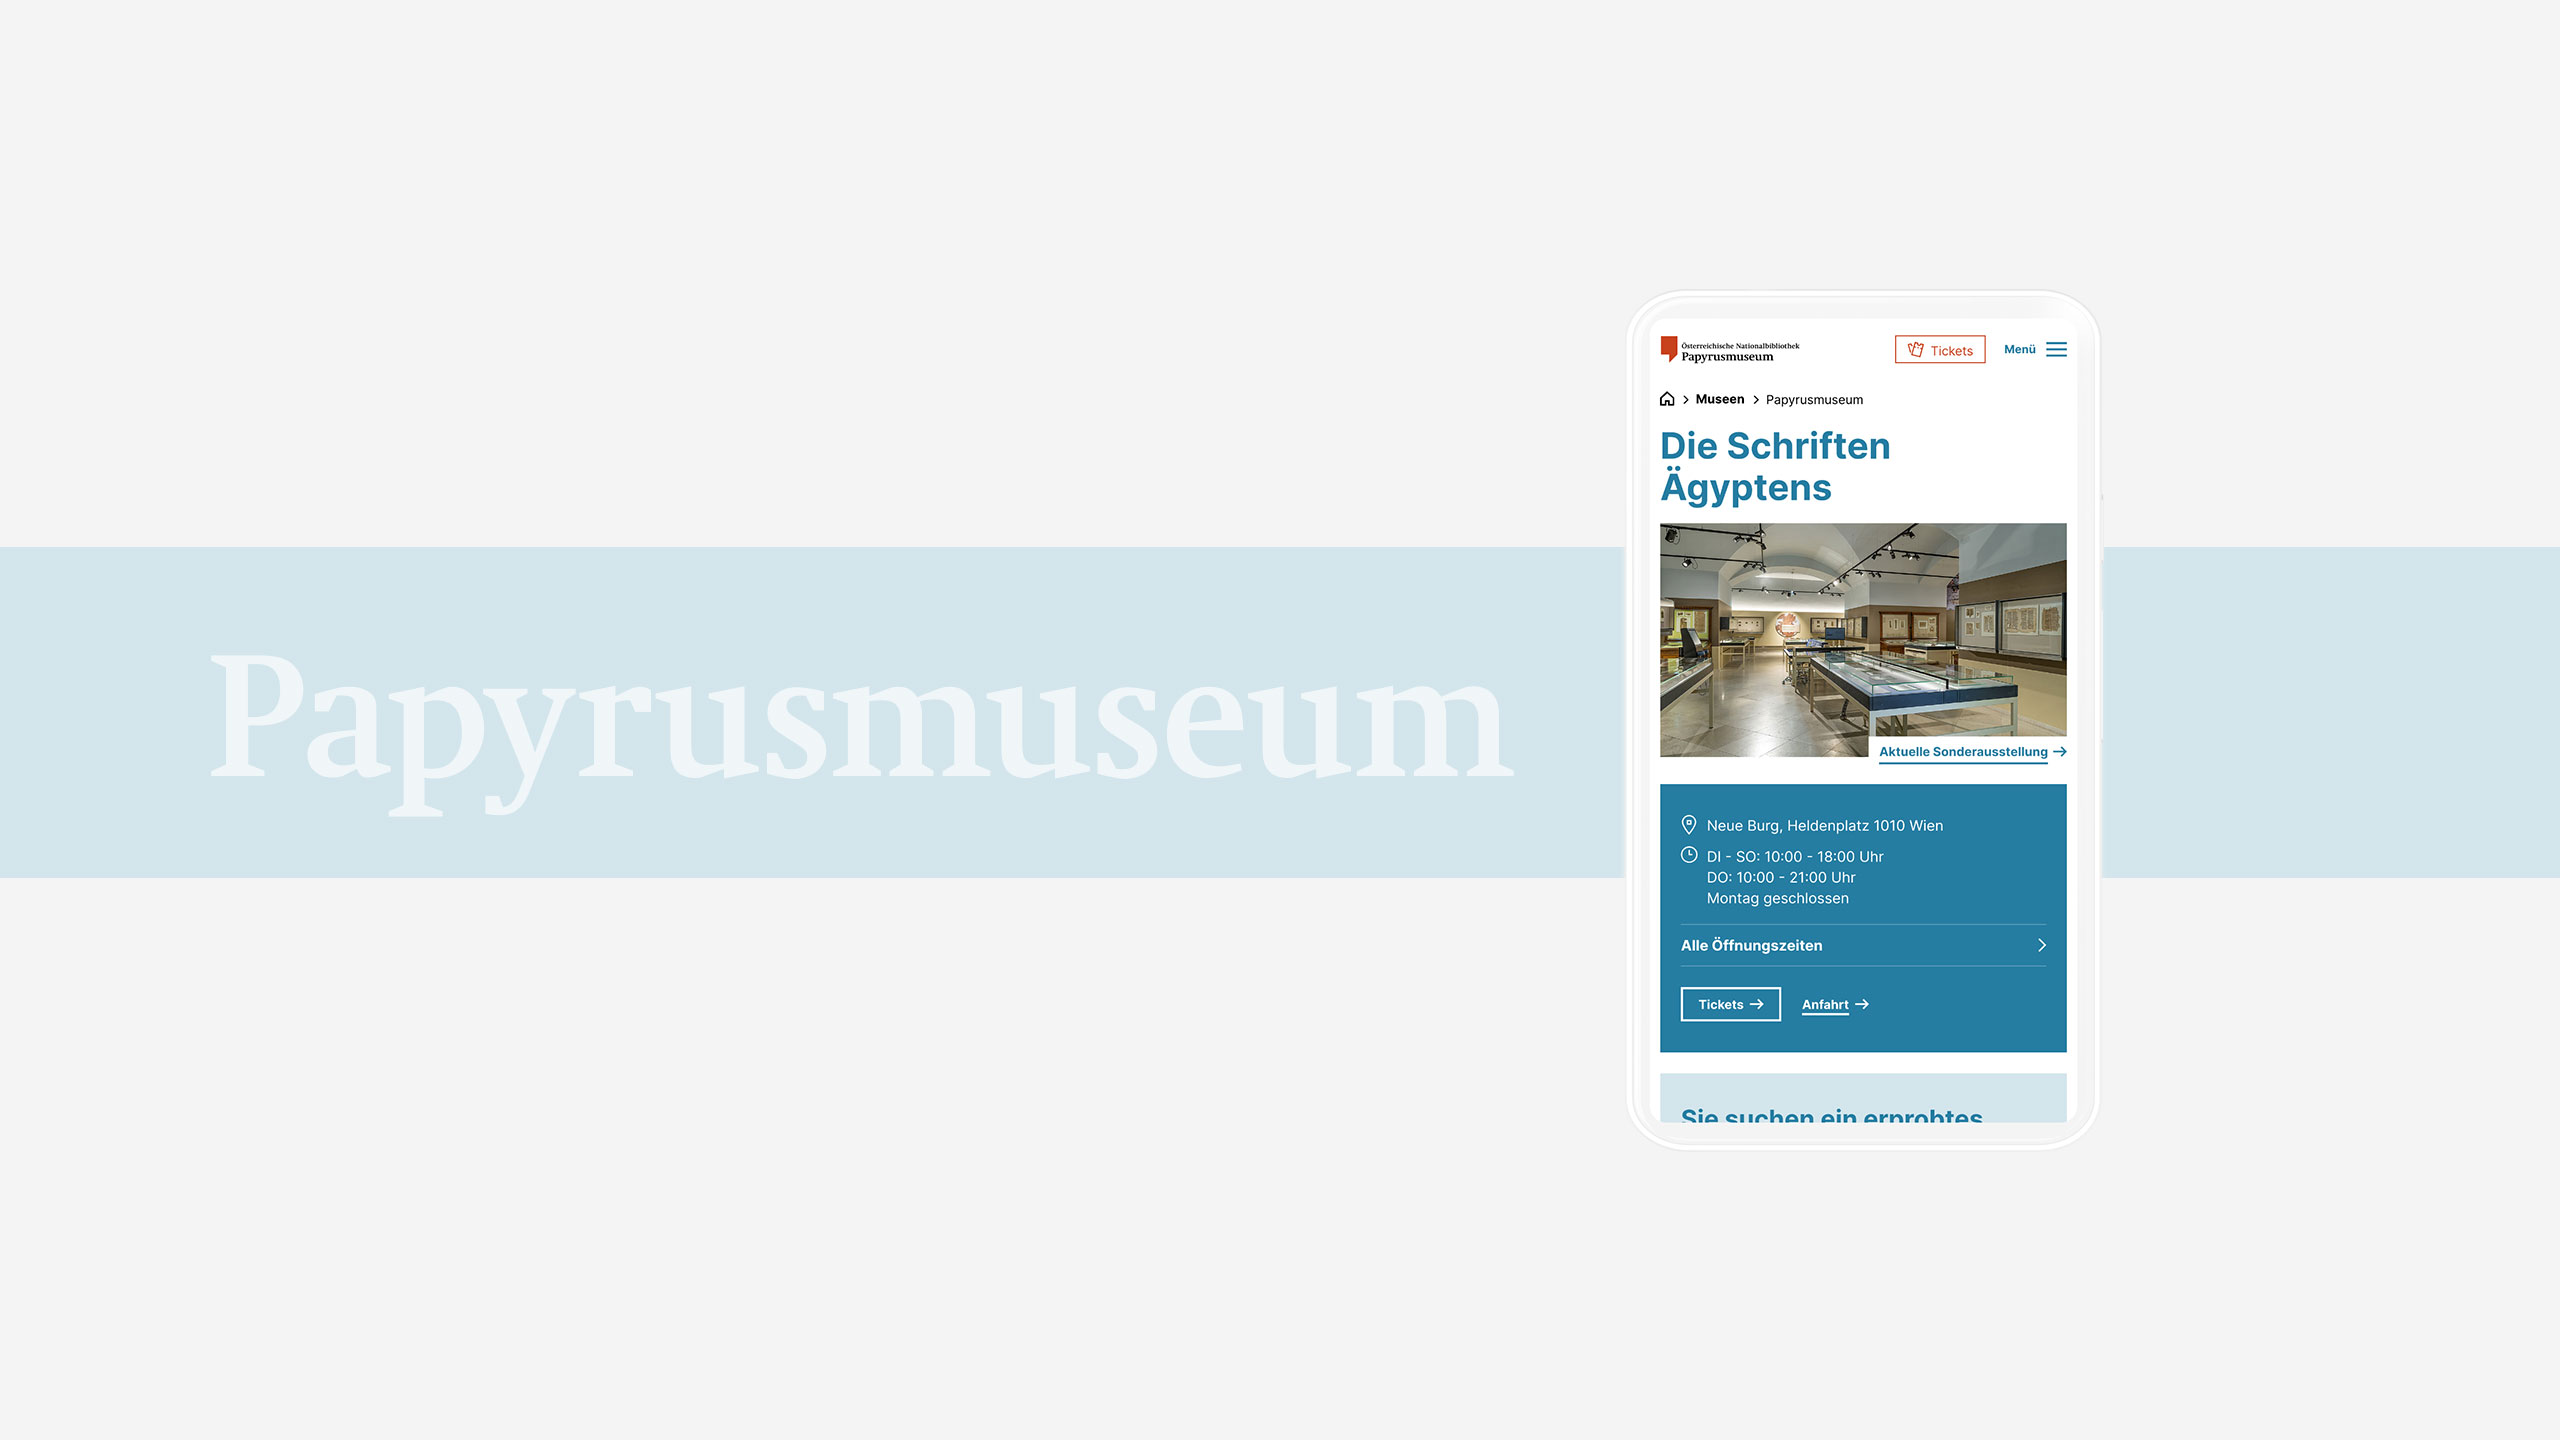 Ein mobiles Mockup der Museums-Seite des Papyrusmuseums der Nationalbibliothek